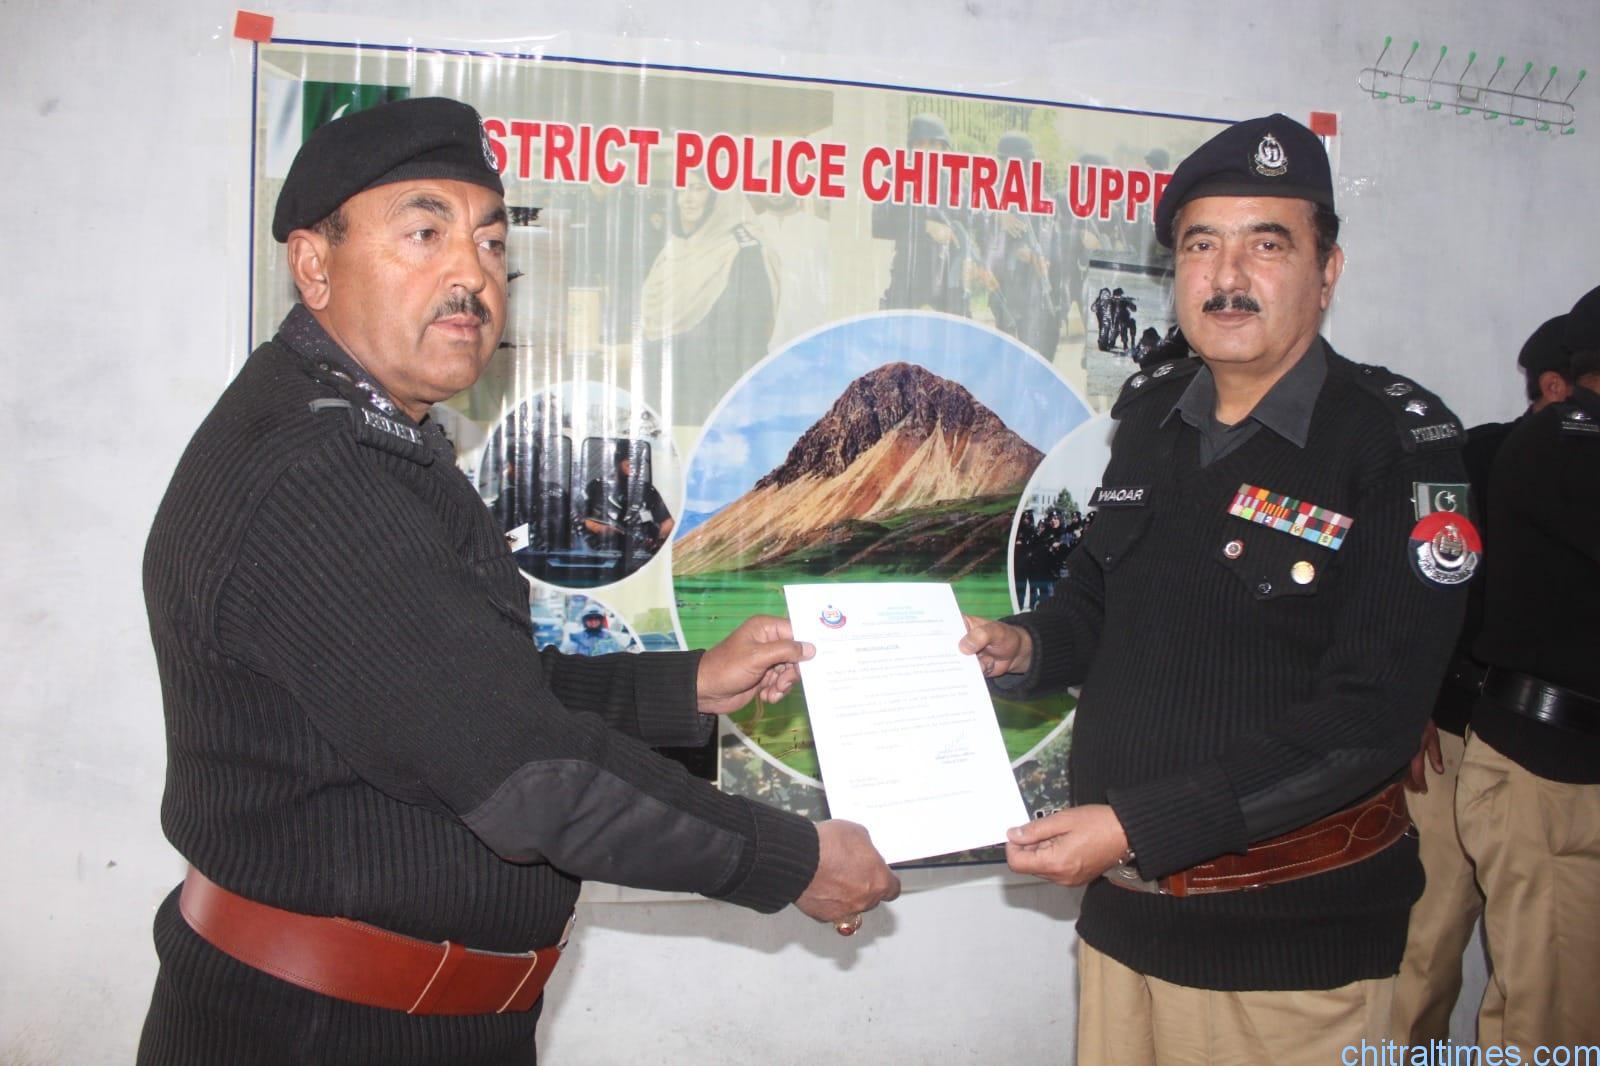 Police upper chitral 4